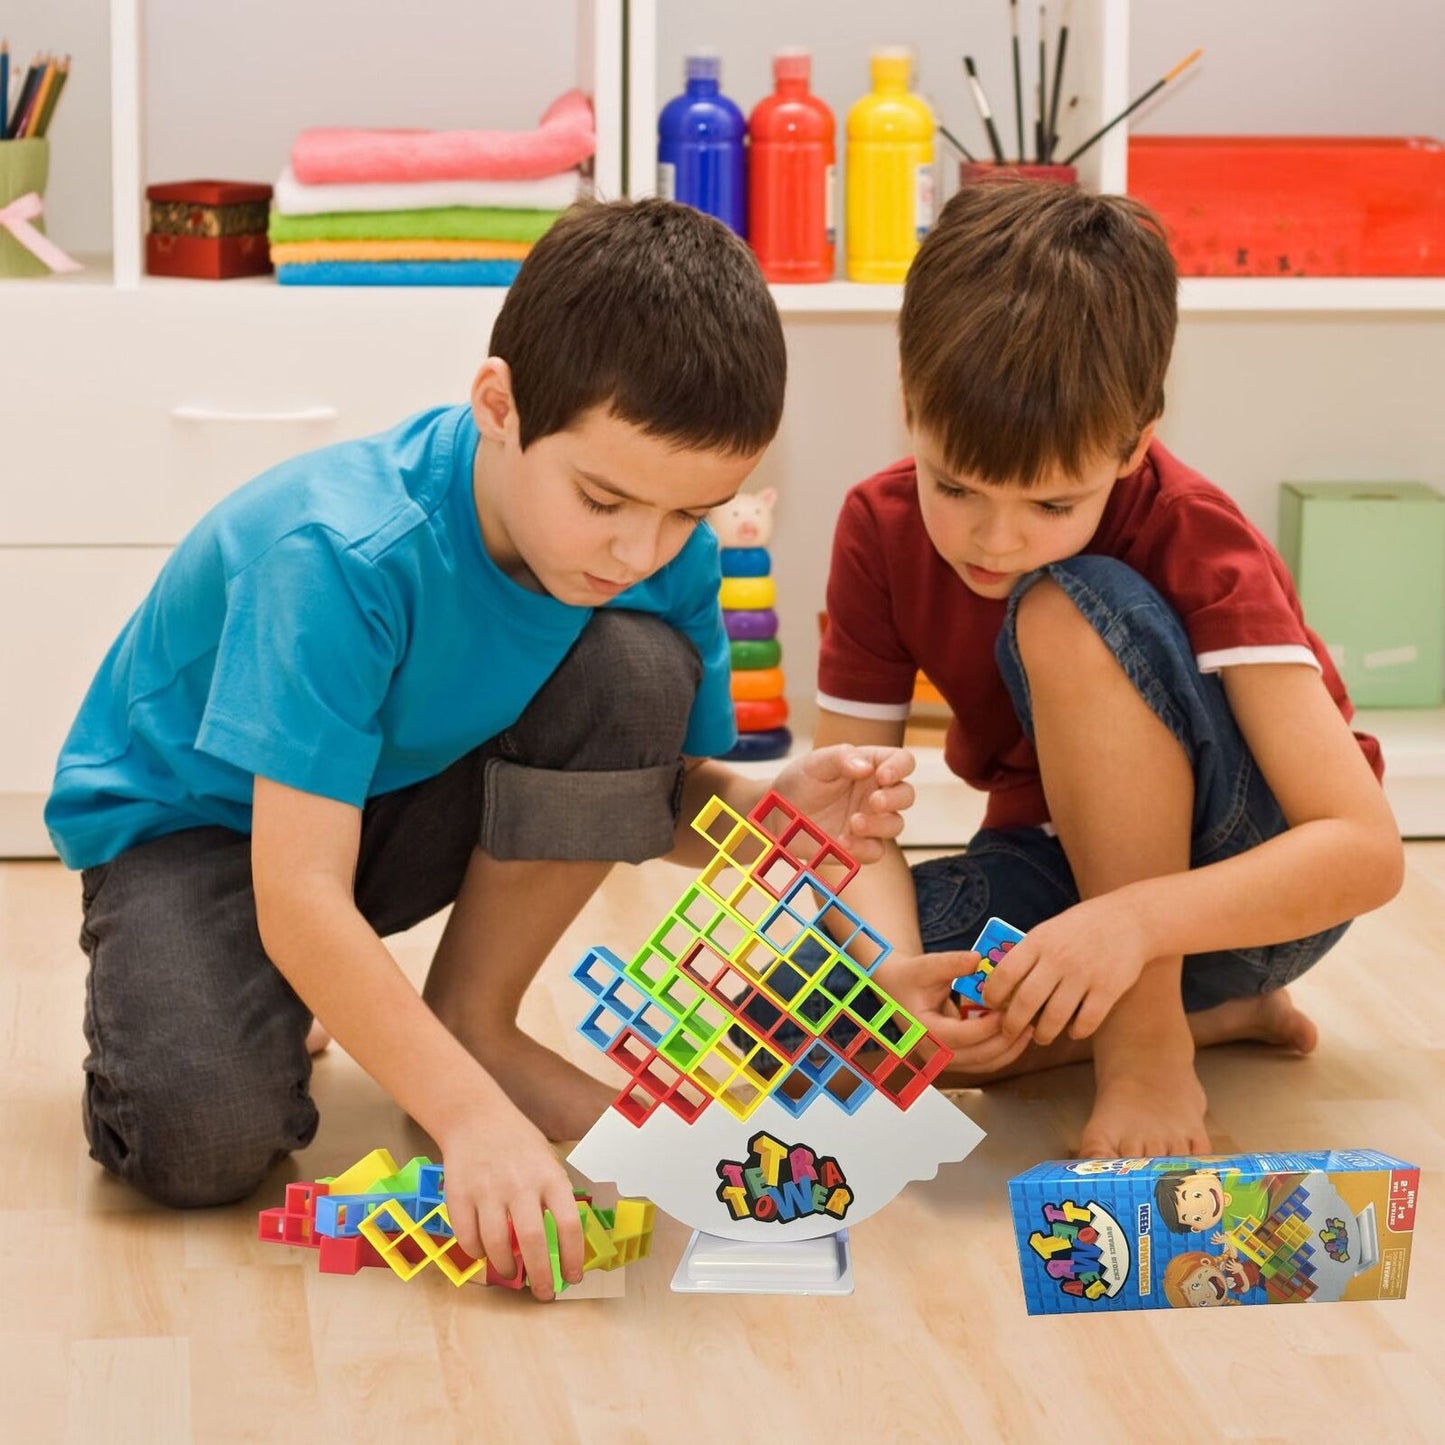 Tetra Tower Balance Stacking Blocks Game Team Toys Xmas Gifts Kids Adults